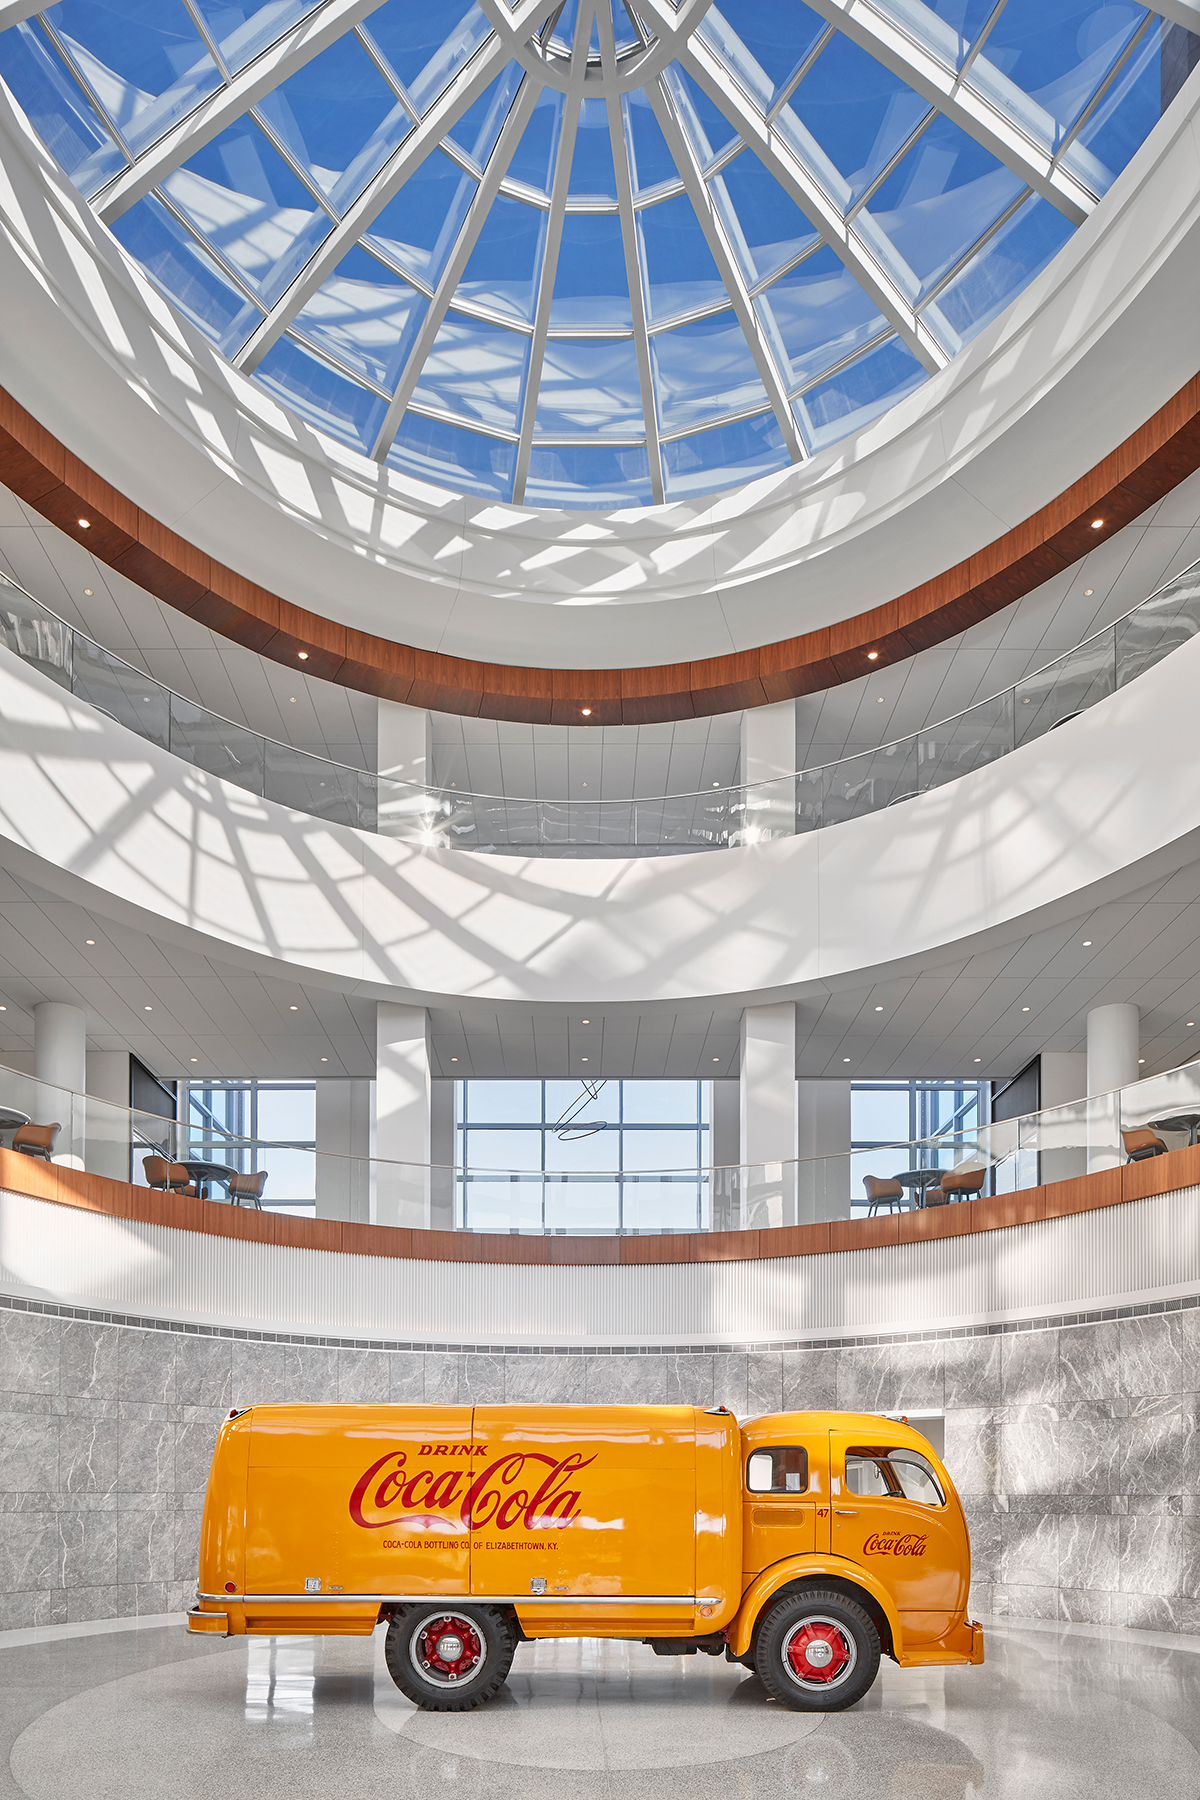 Coke atrium with yellow truck